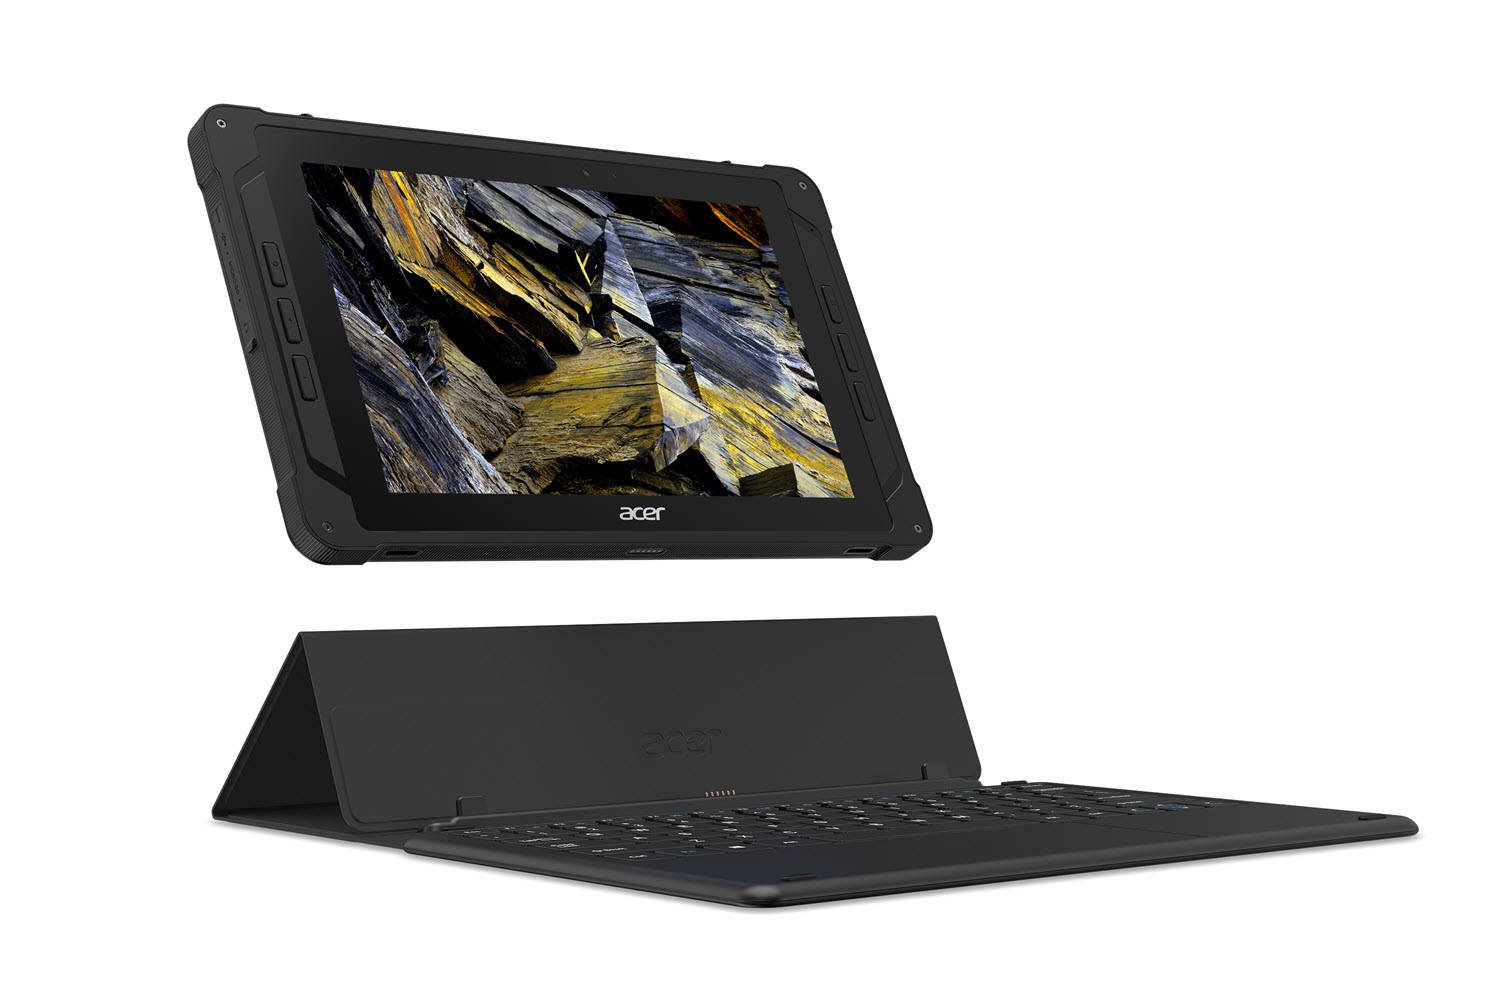 Immagine di Acer Enduro, arrivano i notebook e tablet rugged